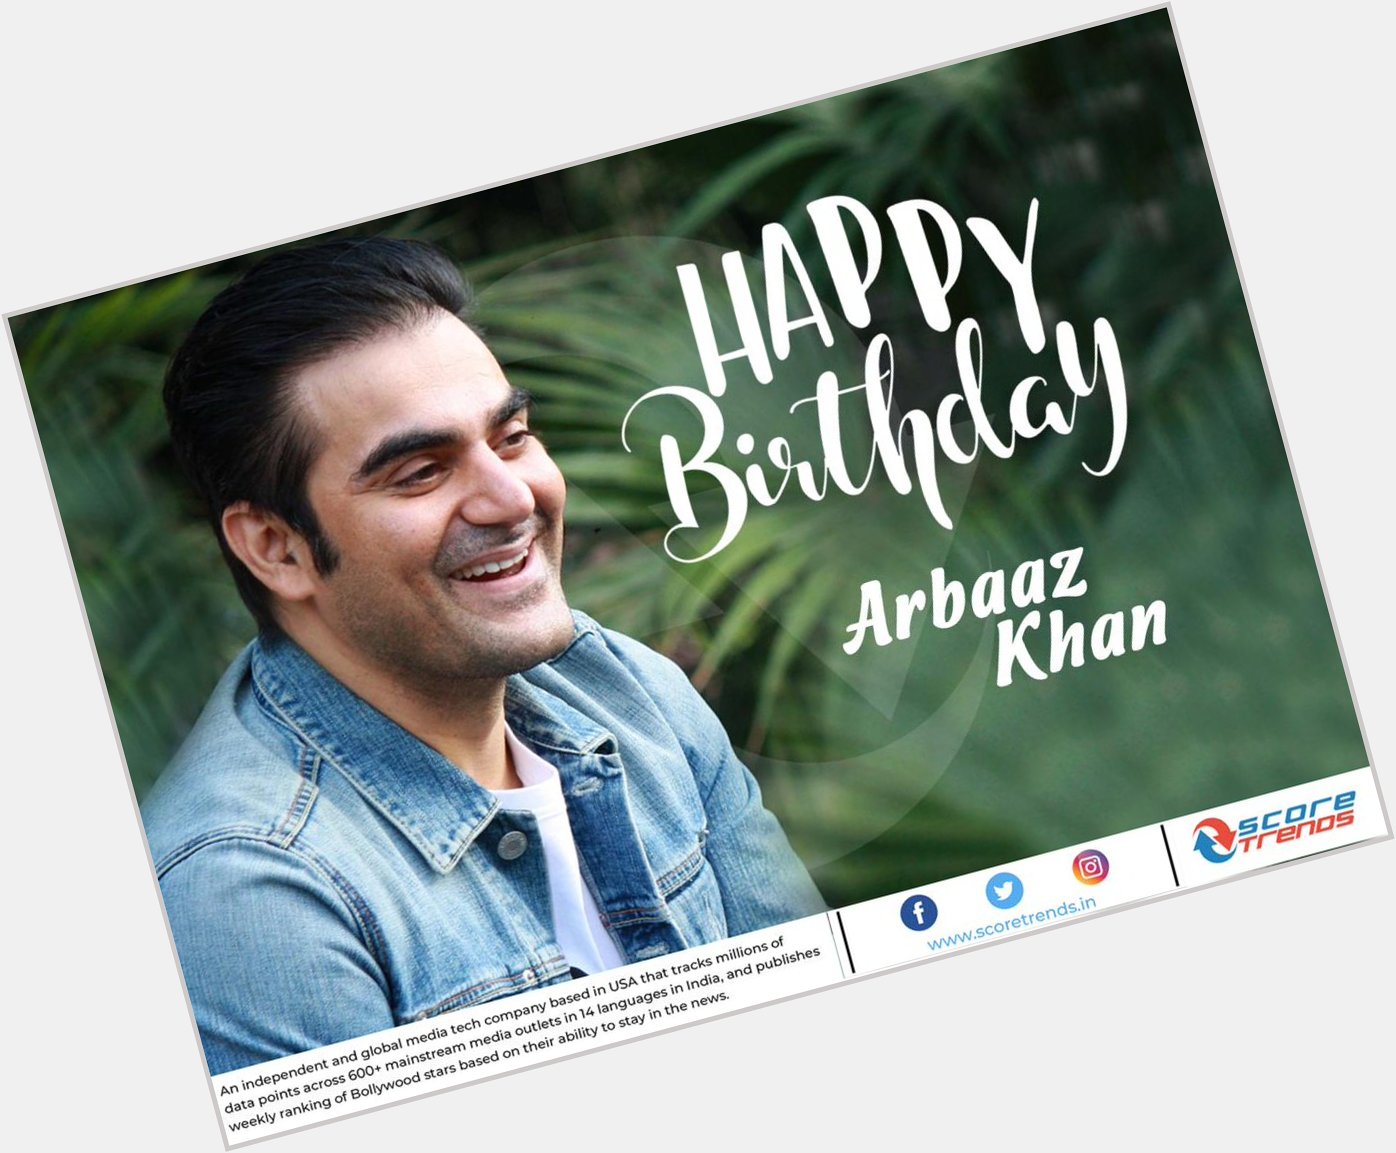 Score Trends wishes Arbaaz Khan a Happy Birthday!! 